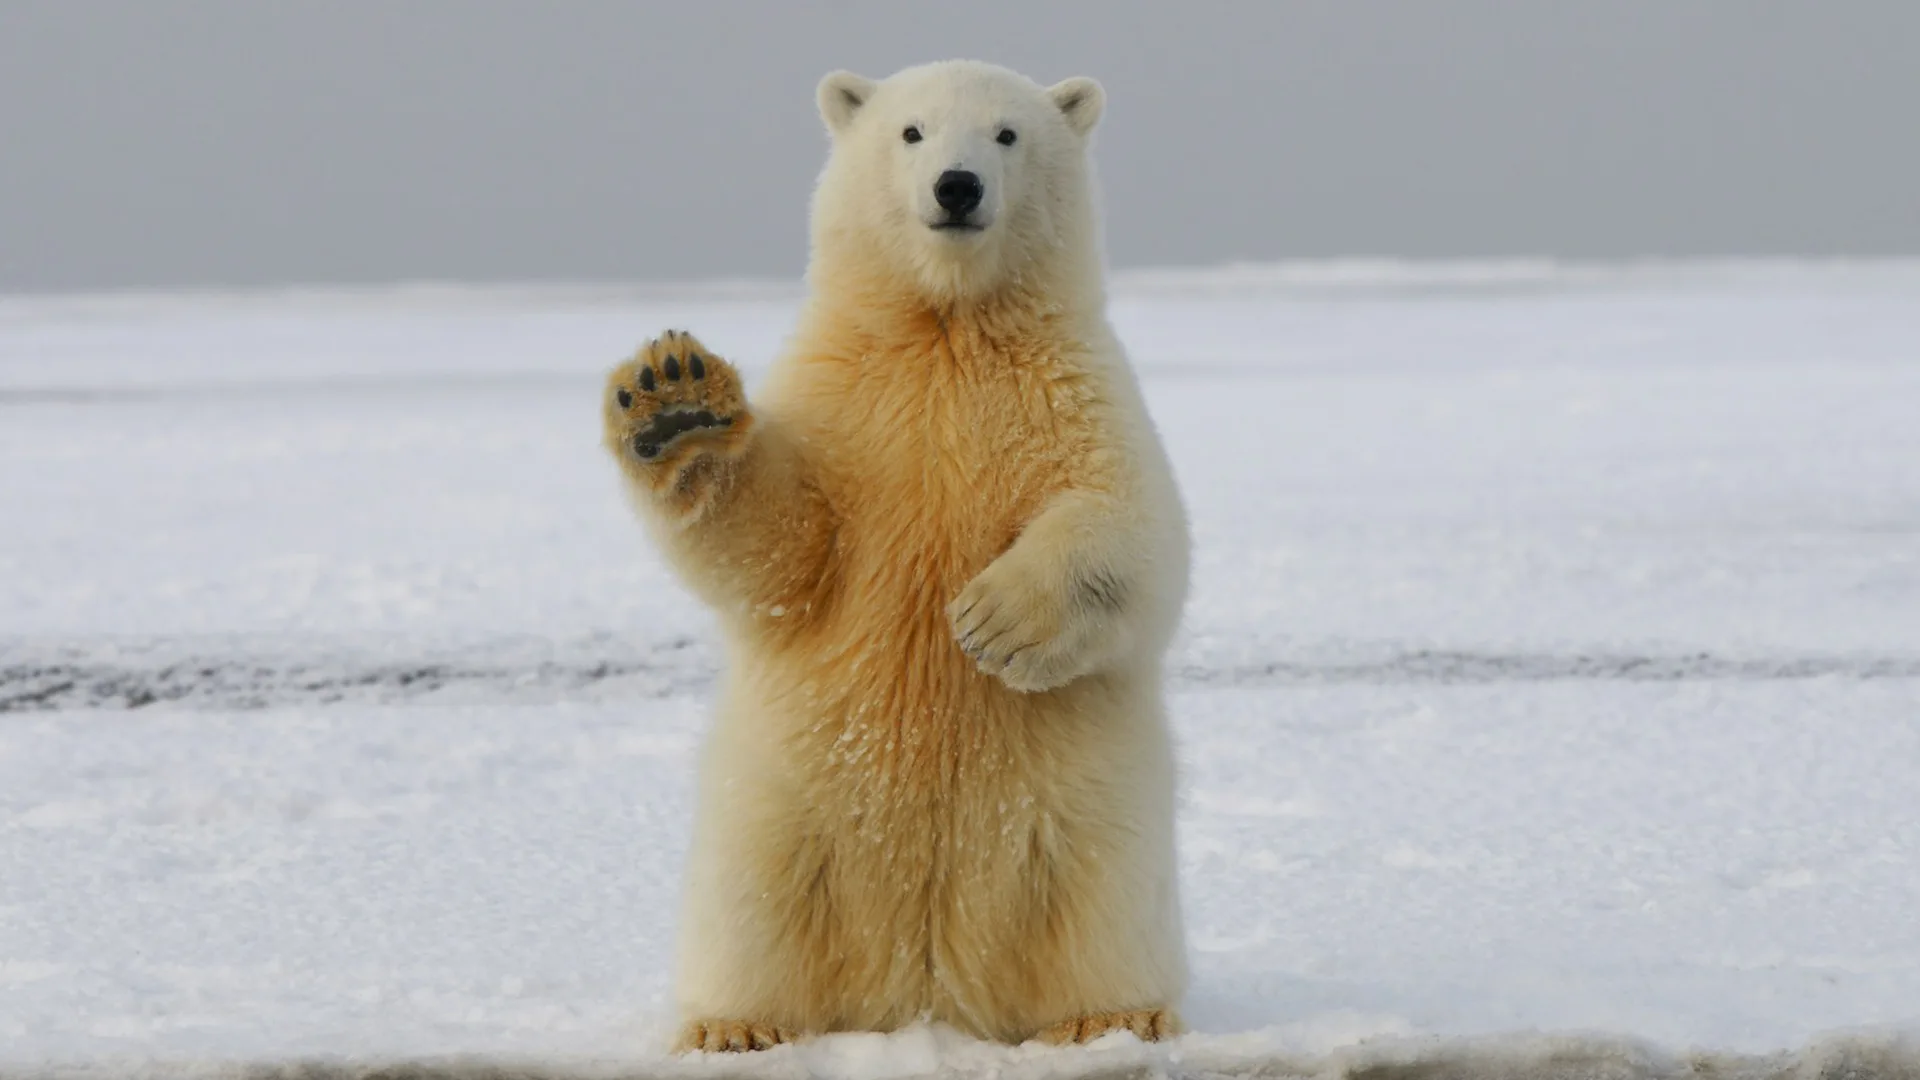 Polar bear on snow covered ground during daytime